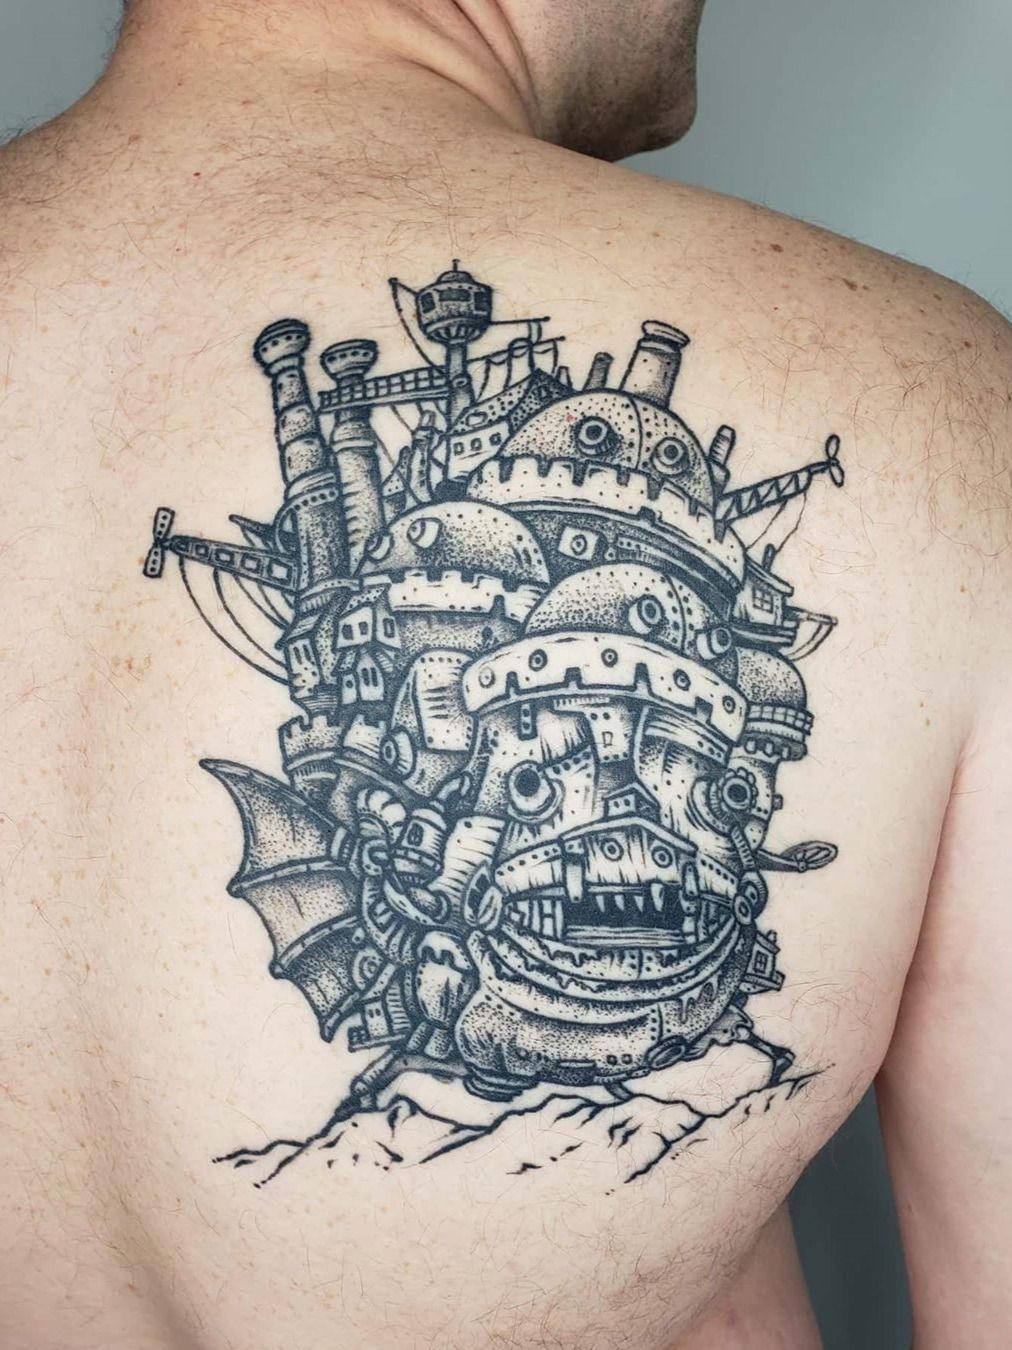 Howls moving castle tattoo by ColourlessValor on DeviantArt